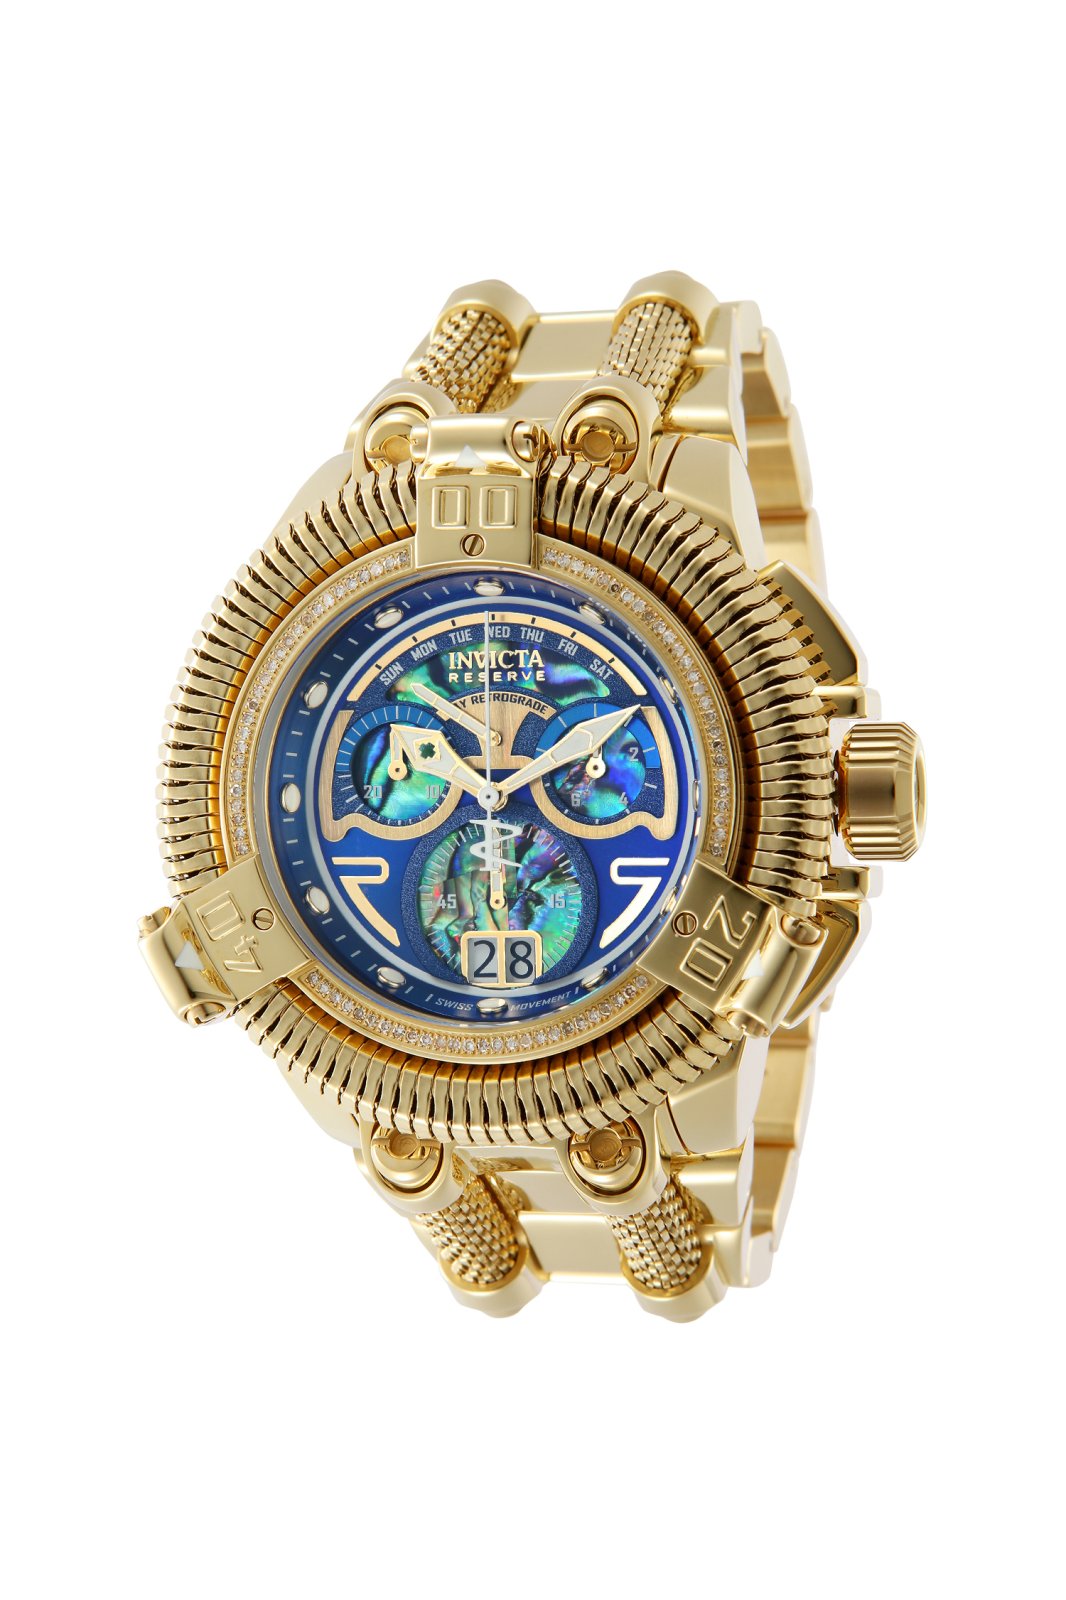 Invicta King Python 39954 Men's Quartz Watch - 50mm - With 78 diamonds